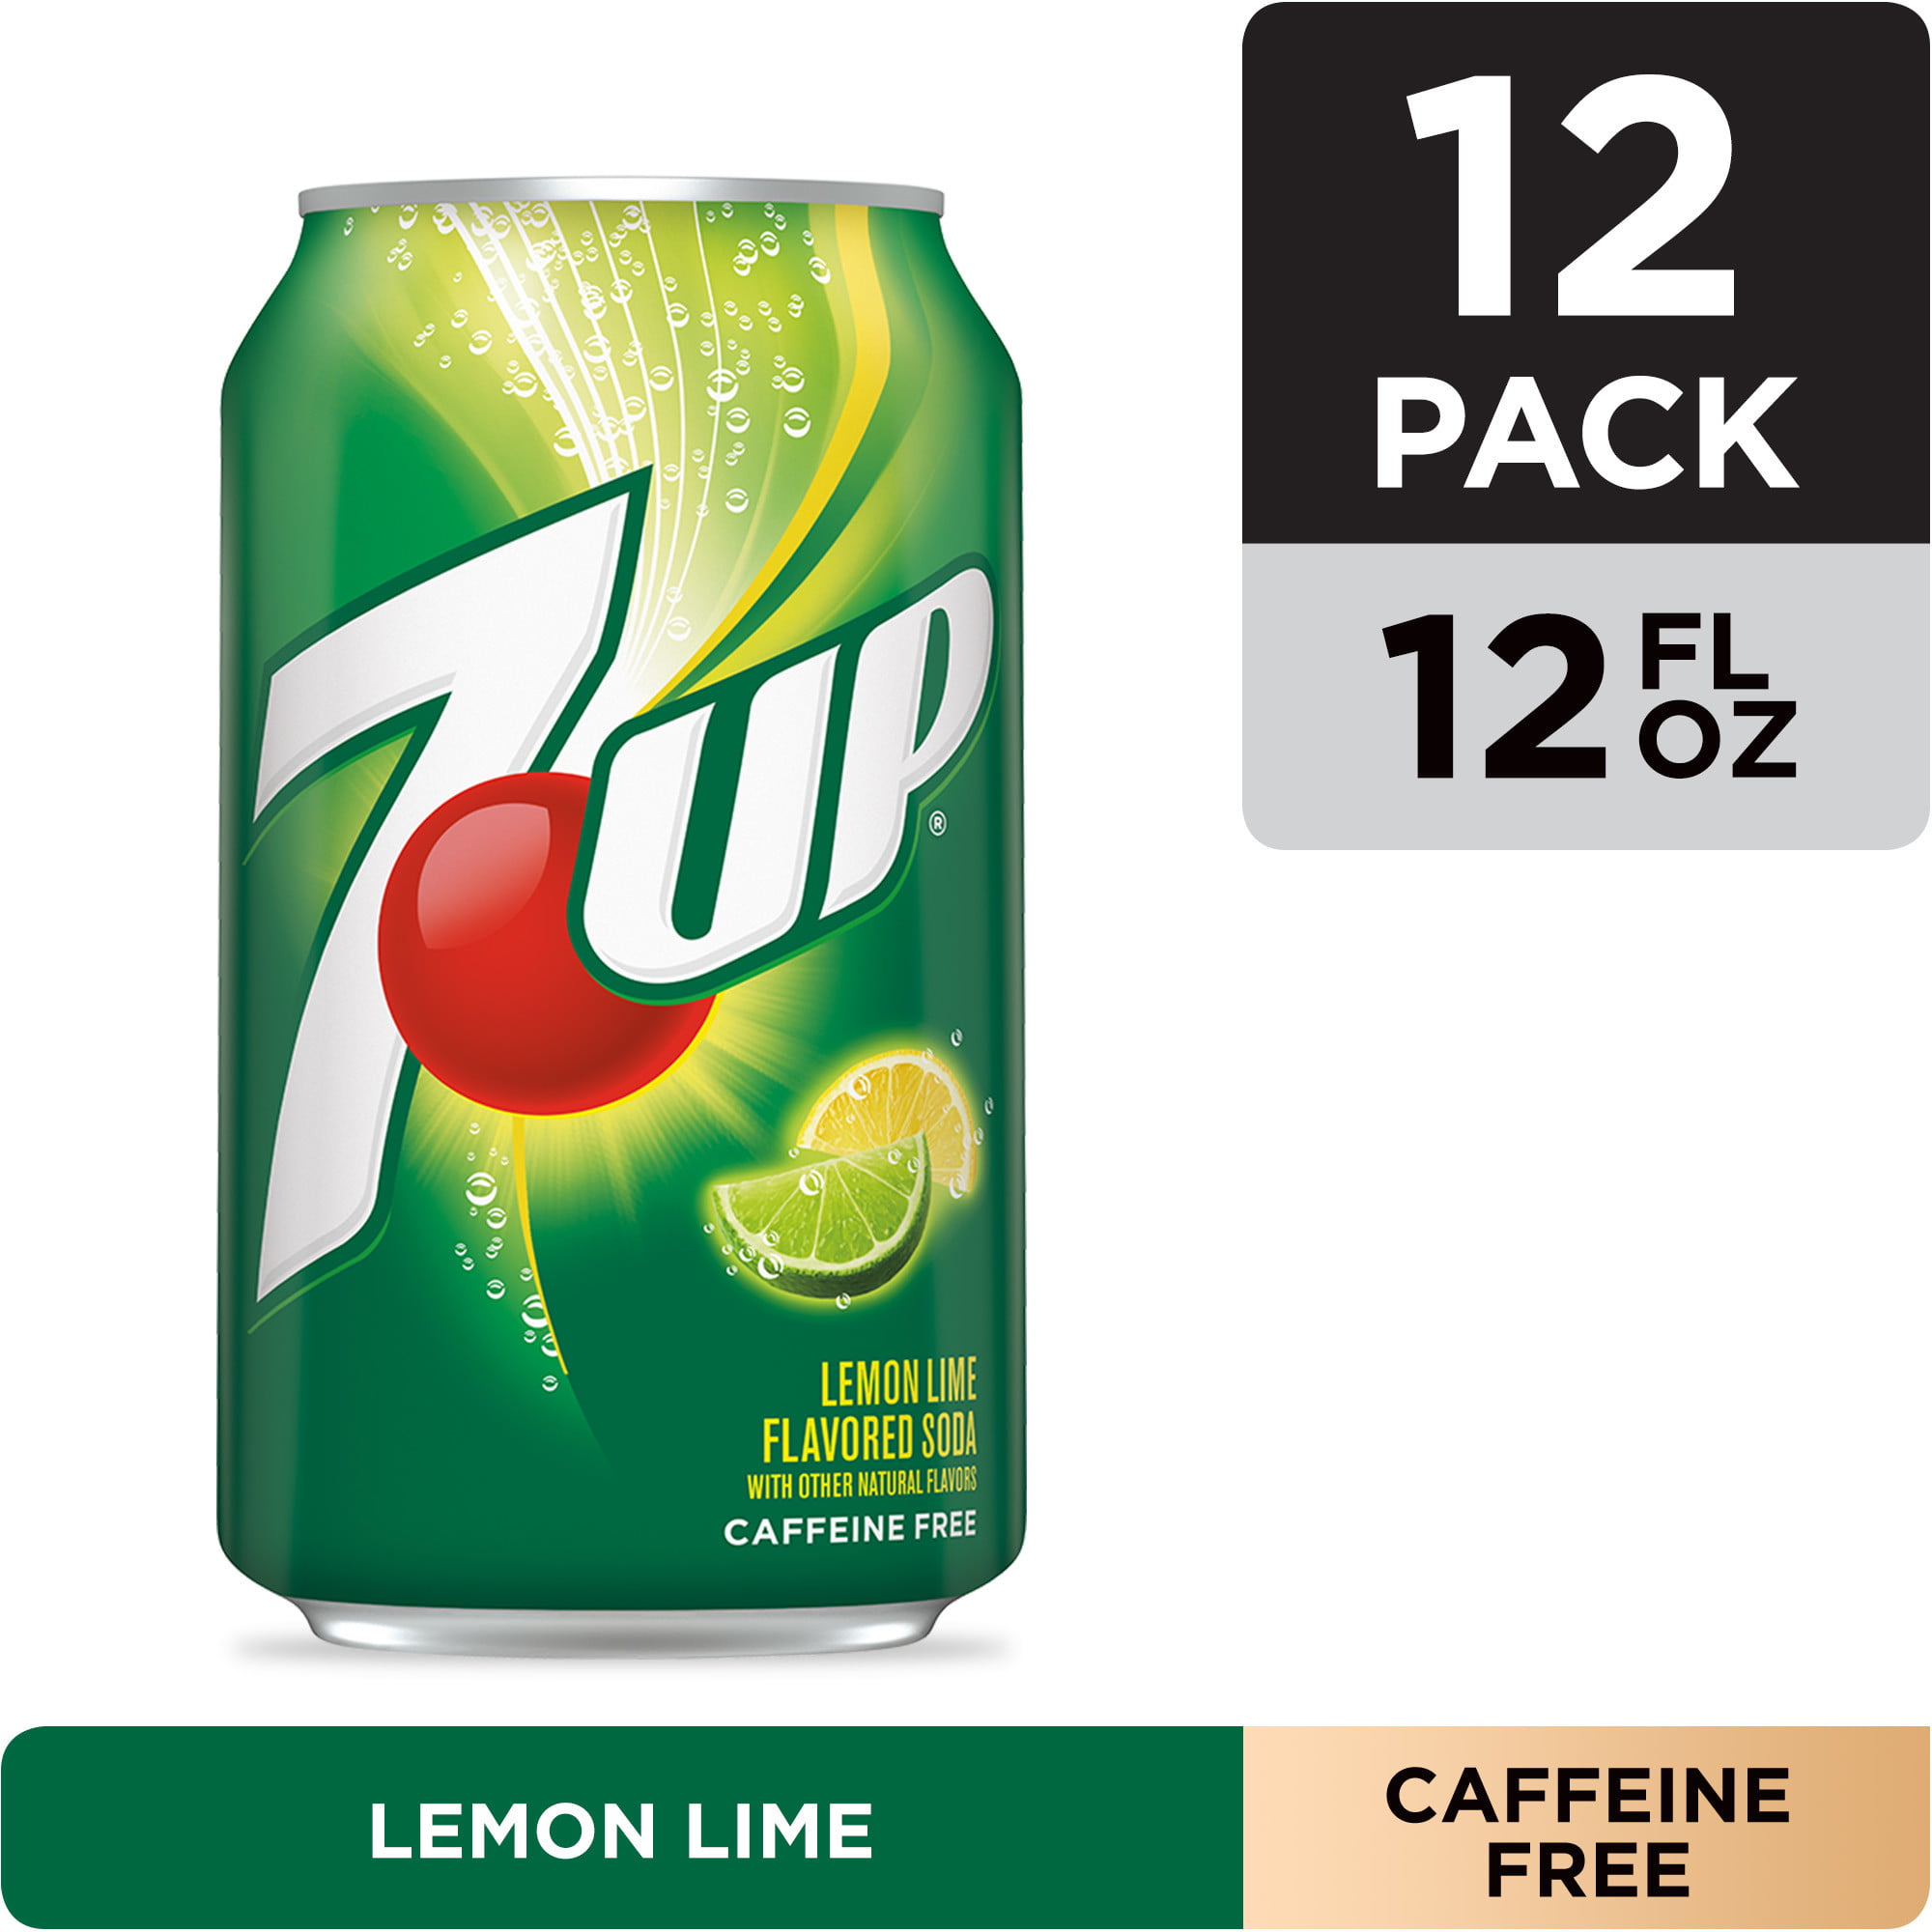 7up Lemon Lime Soda 12 Fl Oz Cans 12 Pack Walmart Inventory